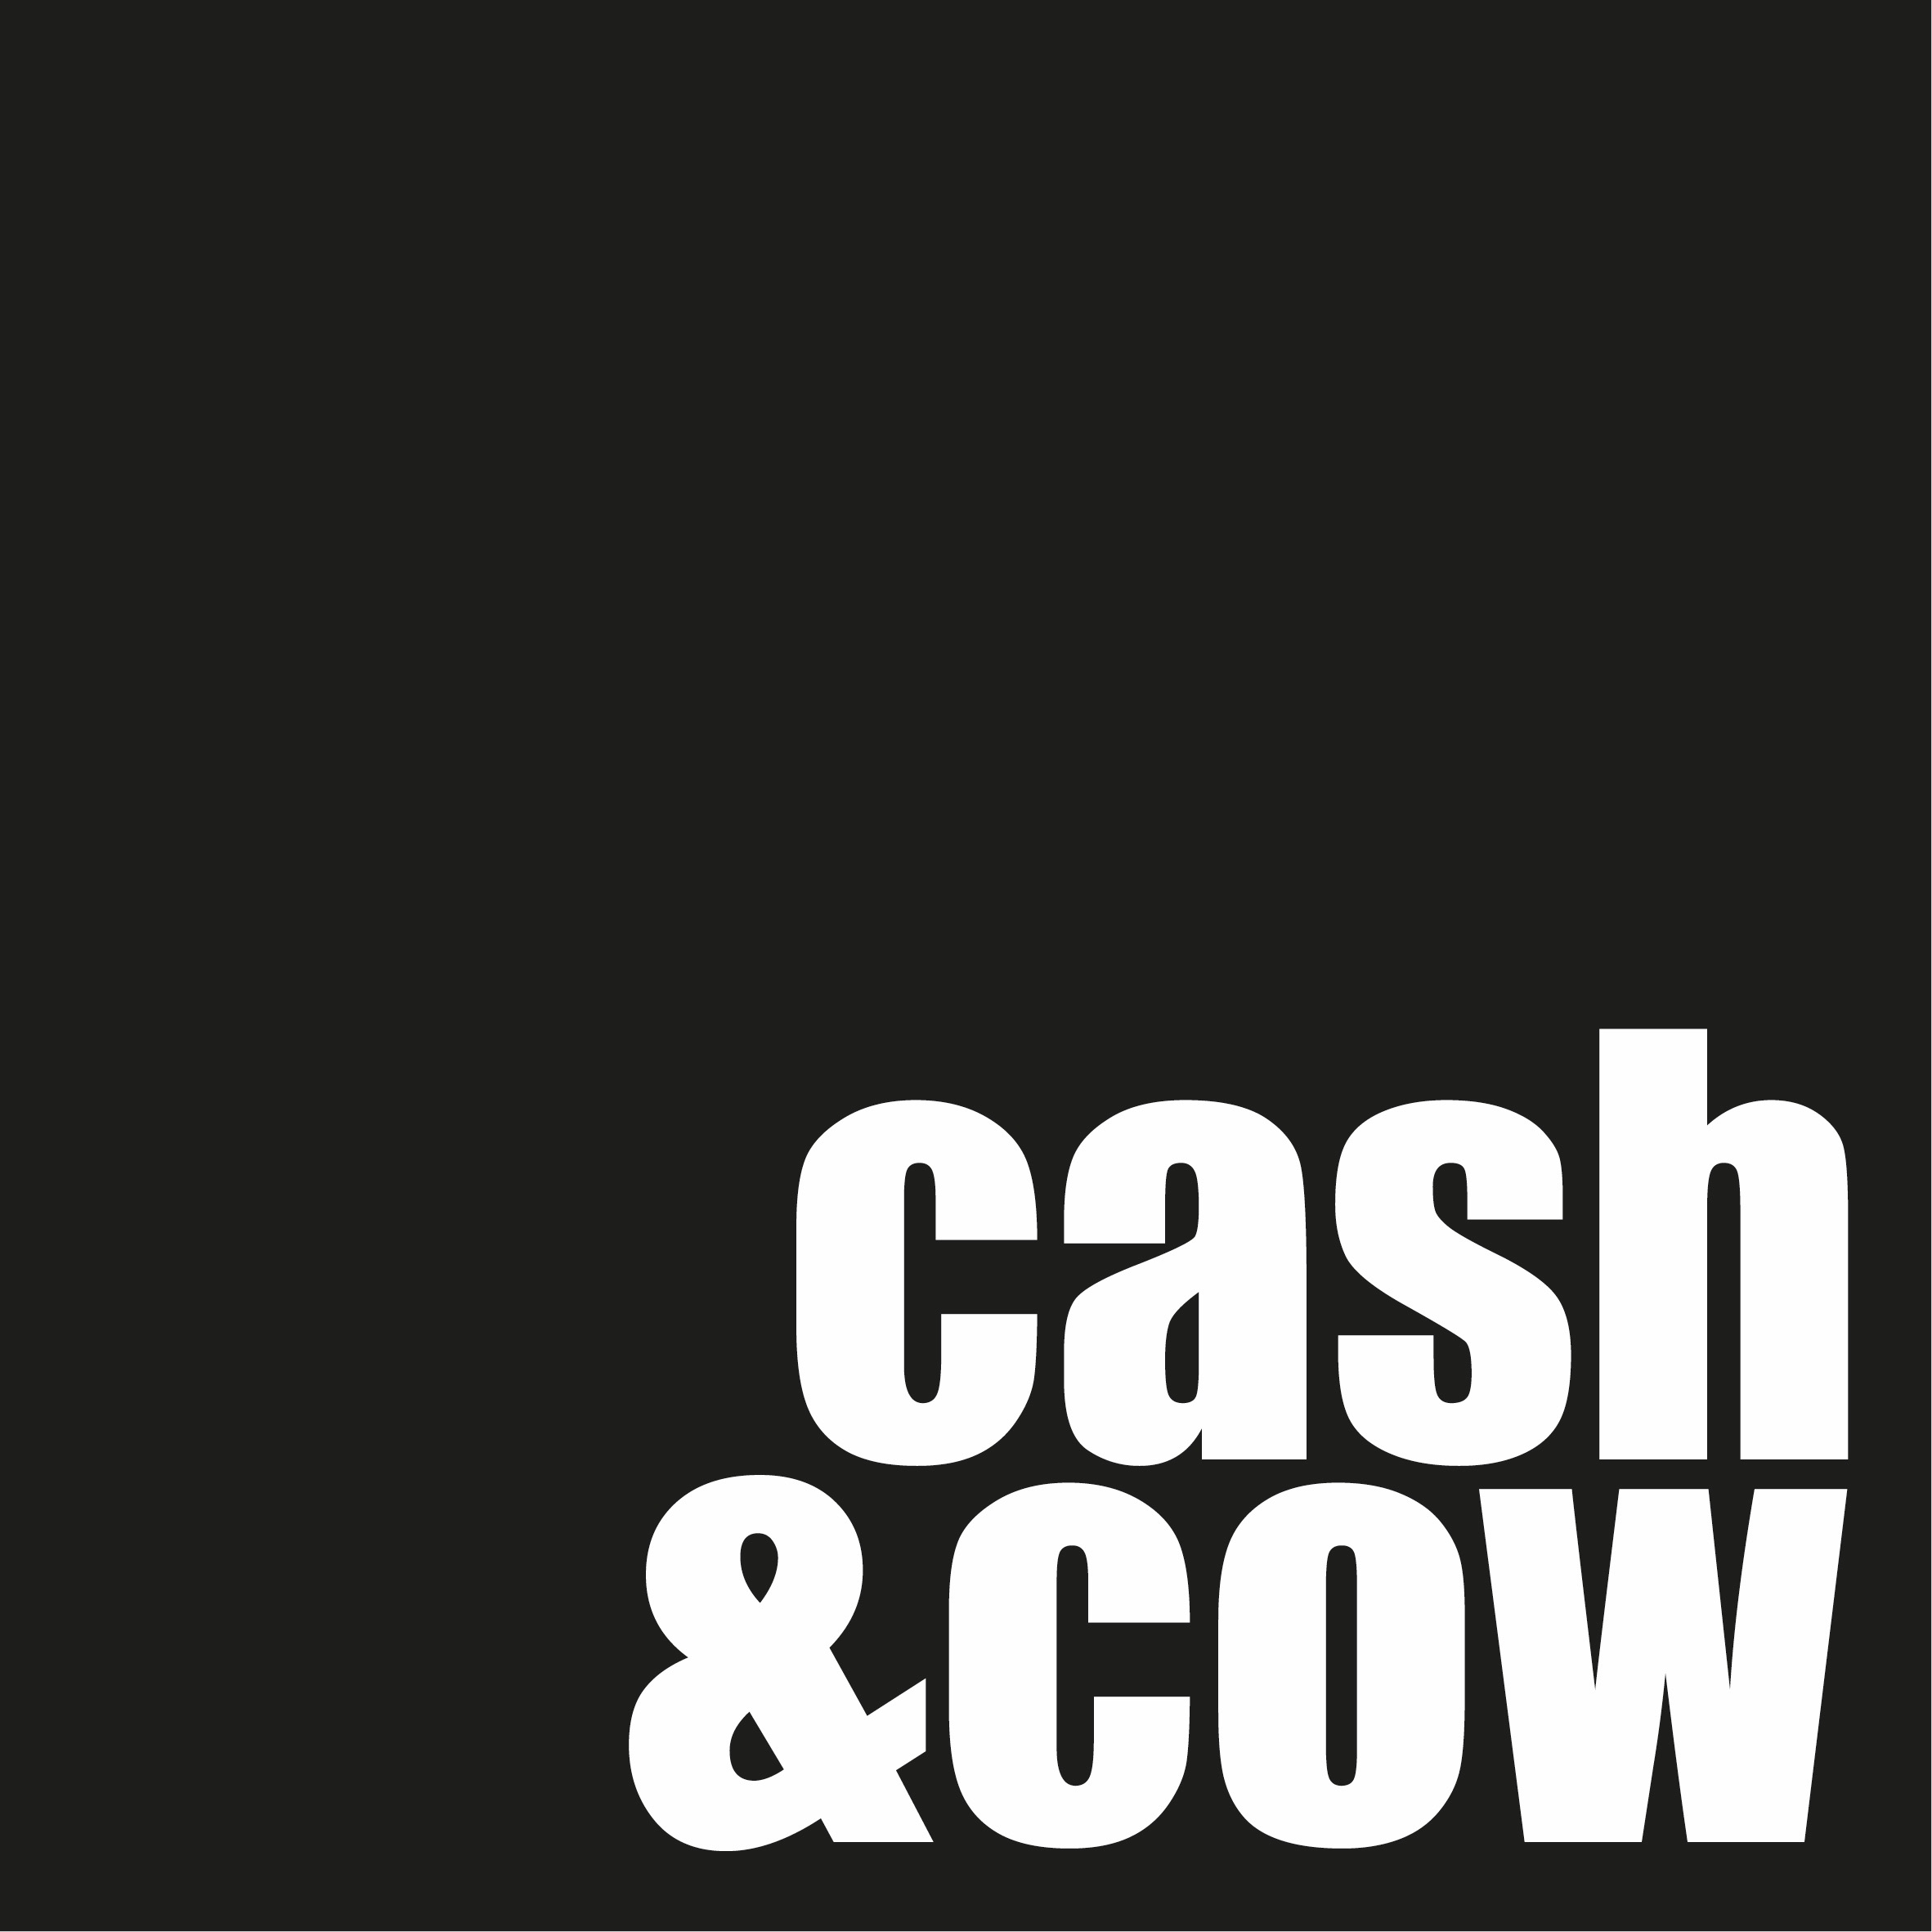 Cash & Cow GmbH